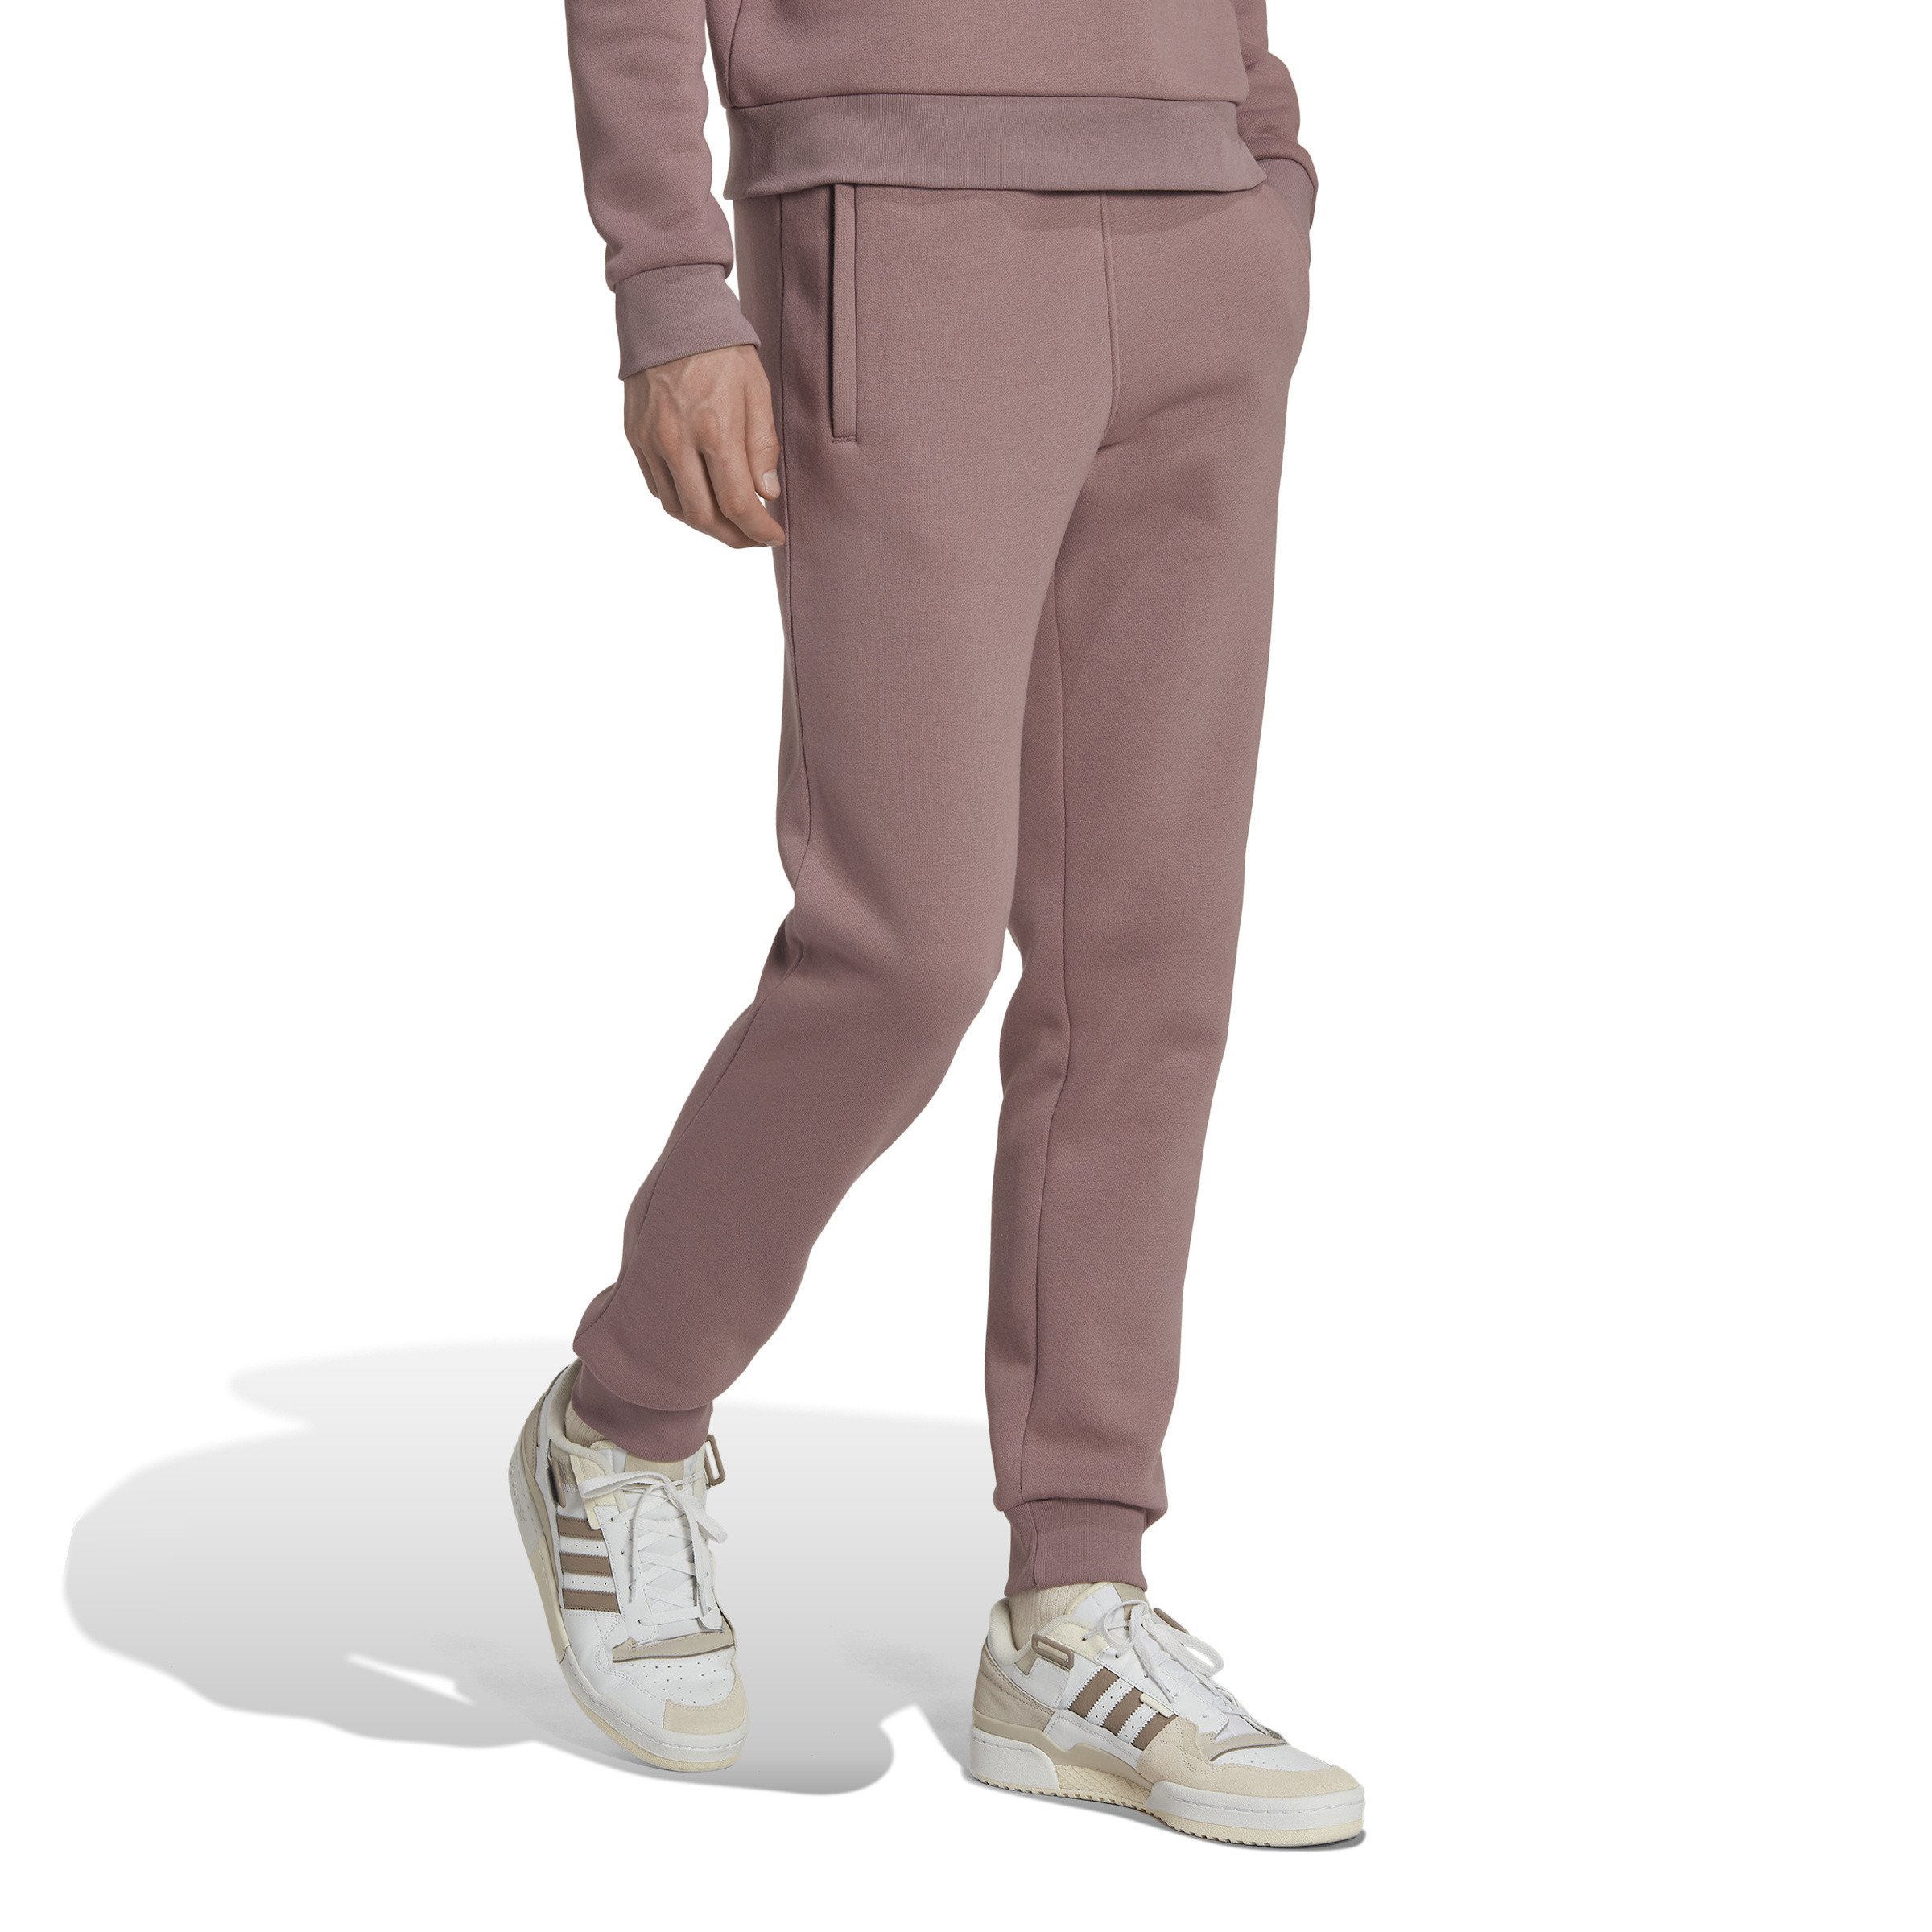 Adidas - Adicolor Essentials Trefoil Pants, Antique Pink, large image number 2